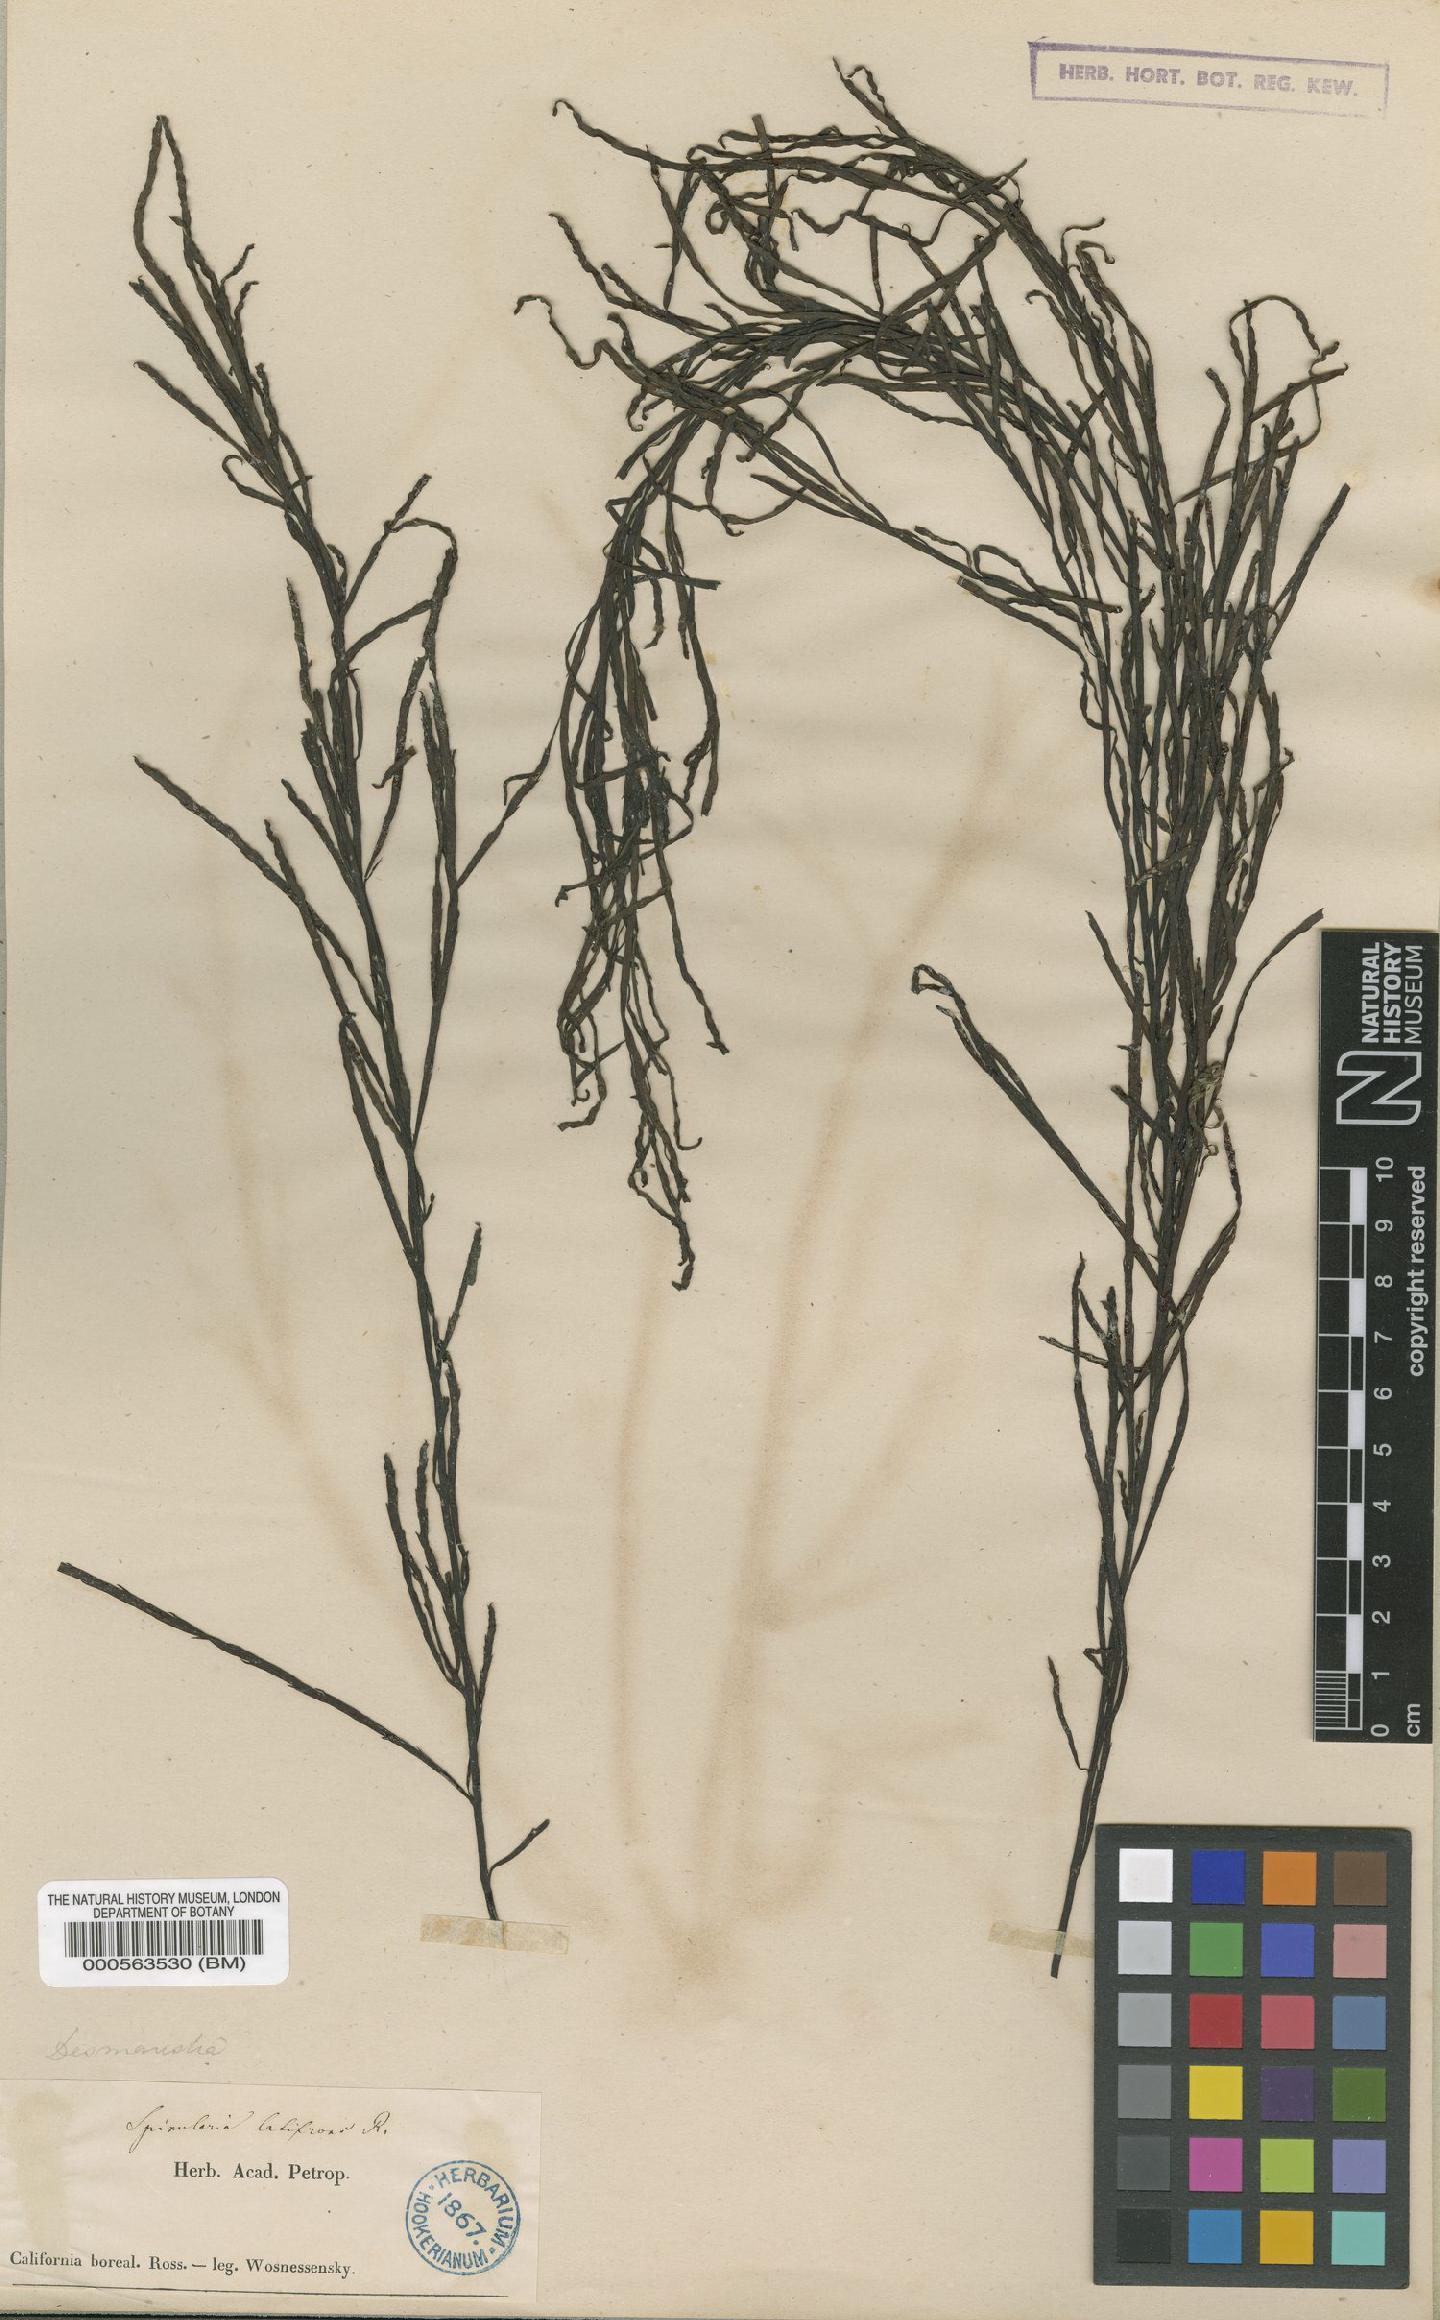 To NHMUK collection (Desmarestia latifrons (Ruprecht) Kütz.; TYPE; NHMUK:ecatalogue:4723483)